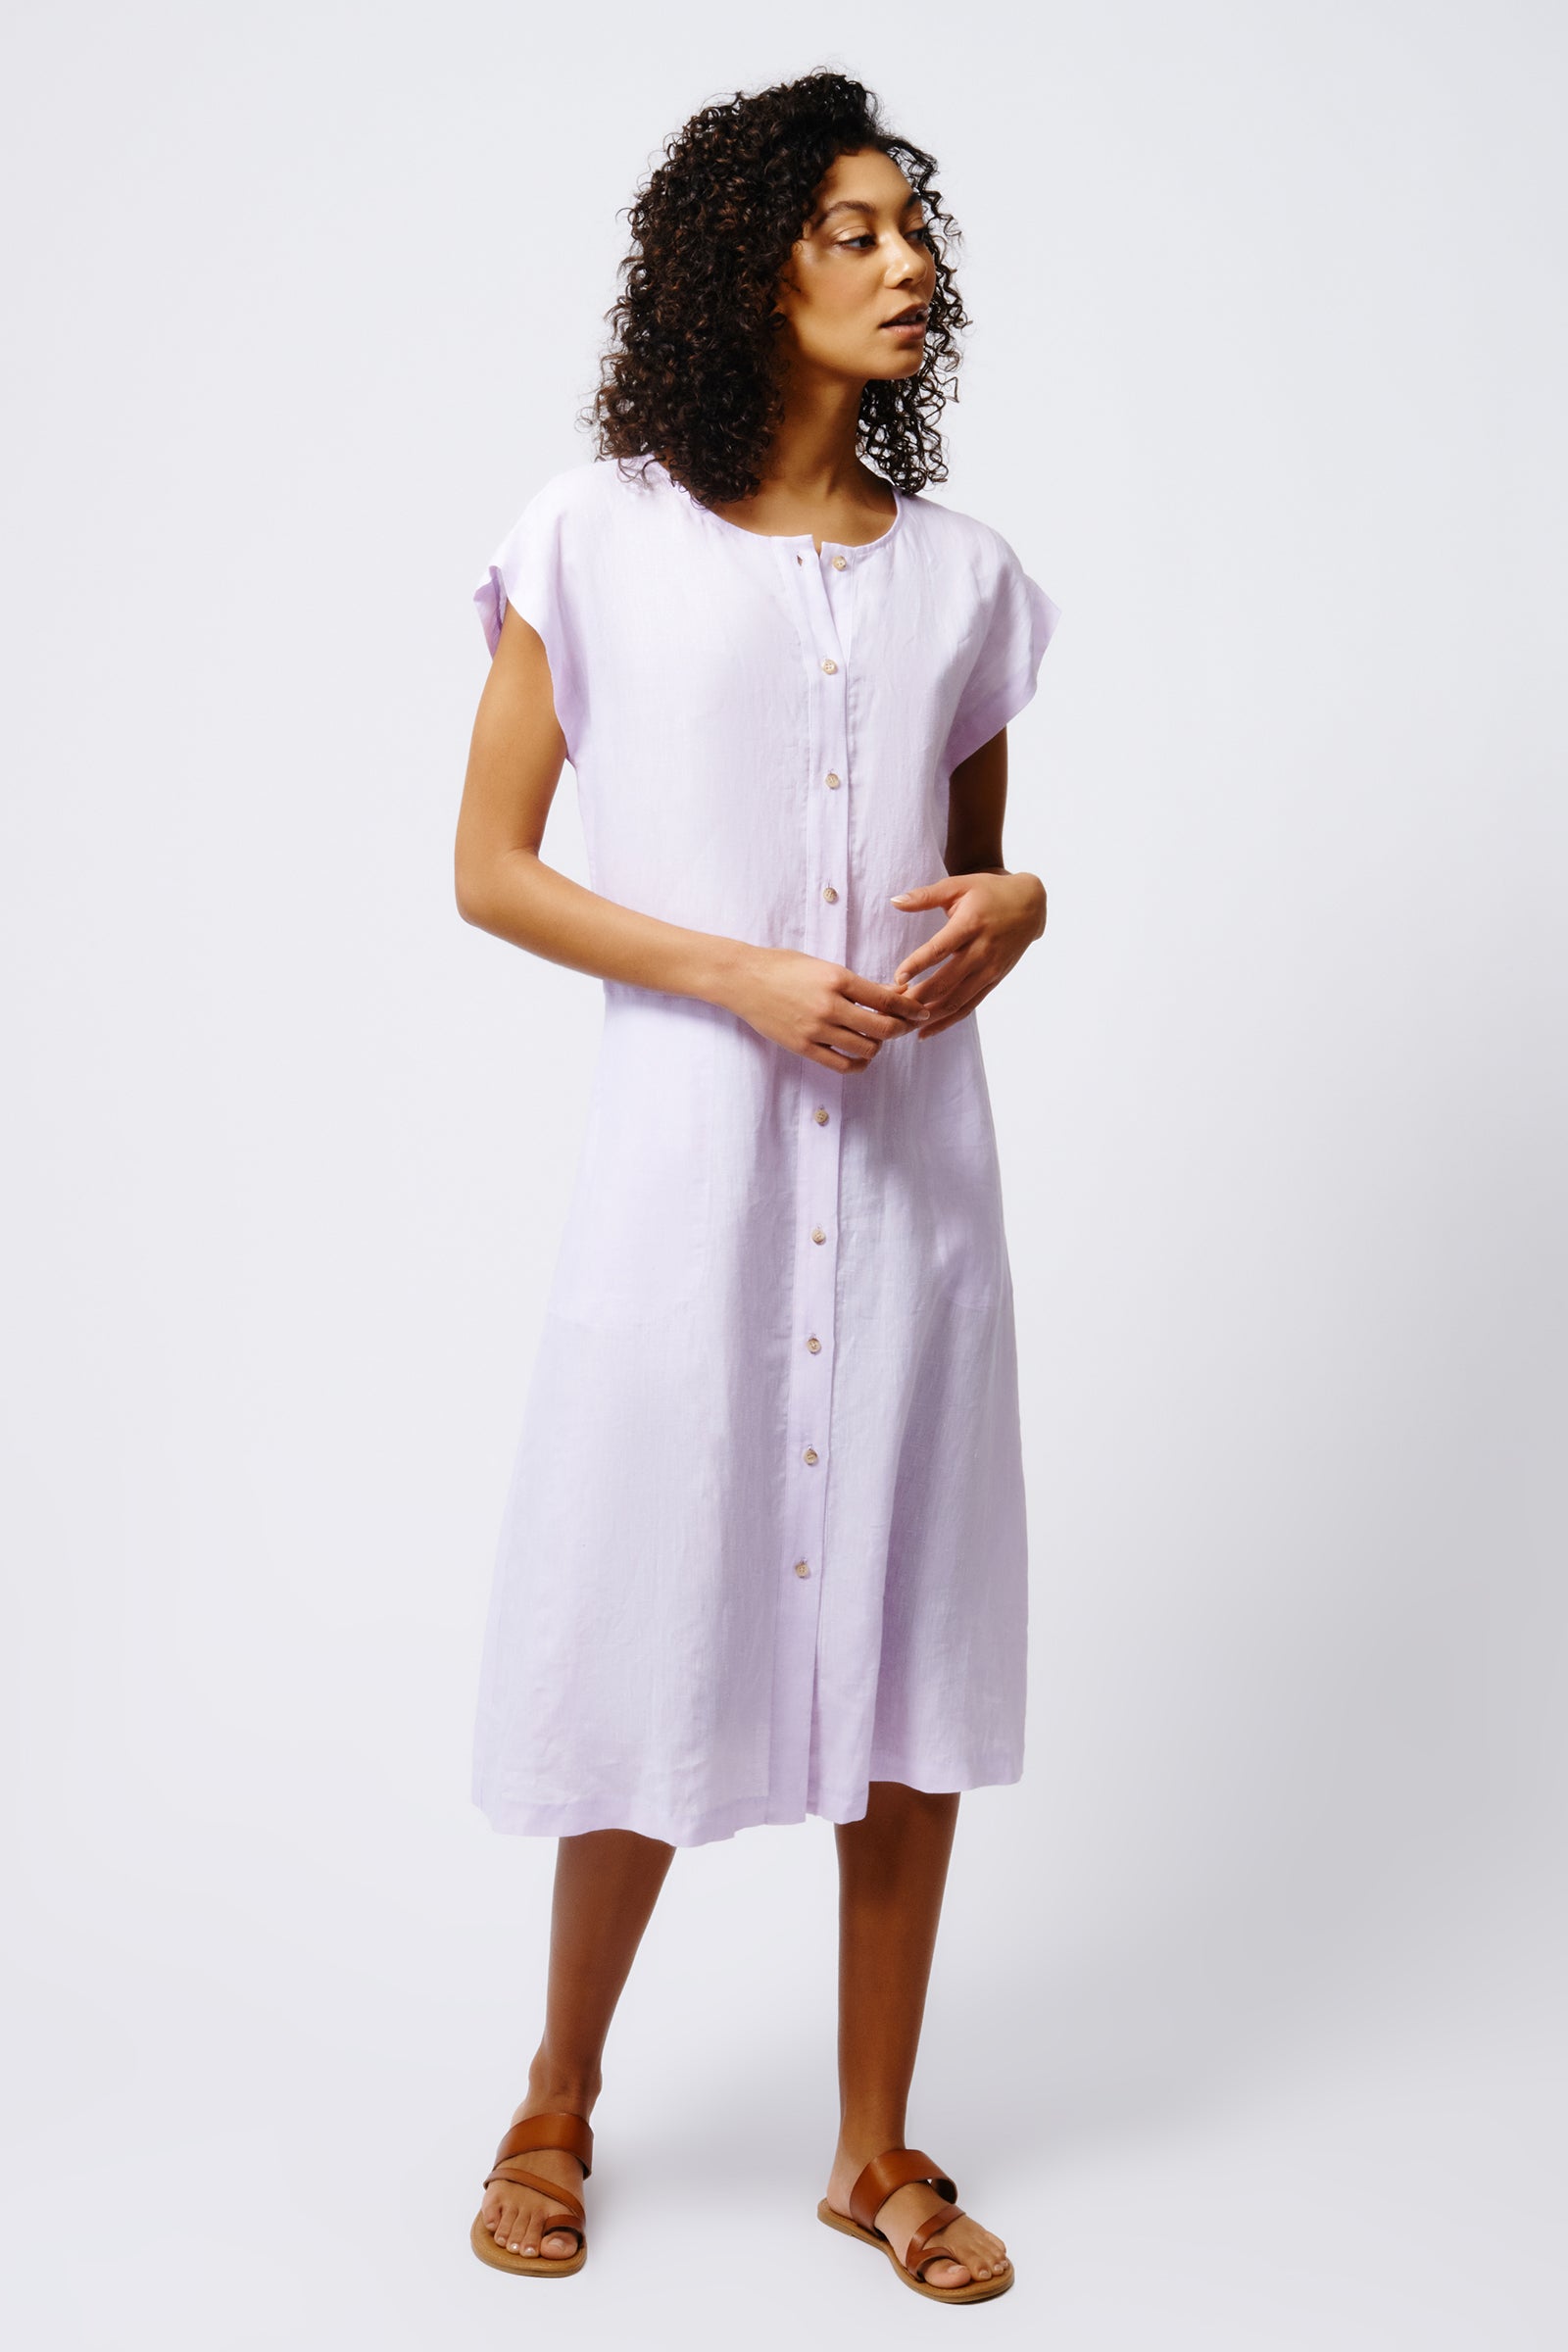 Kal Rieman Harlow Cap Sleeve Dress in Lavender Linen on Model Front View Full 2